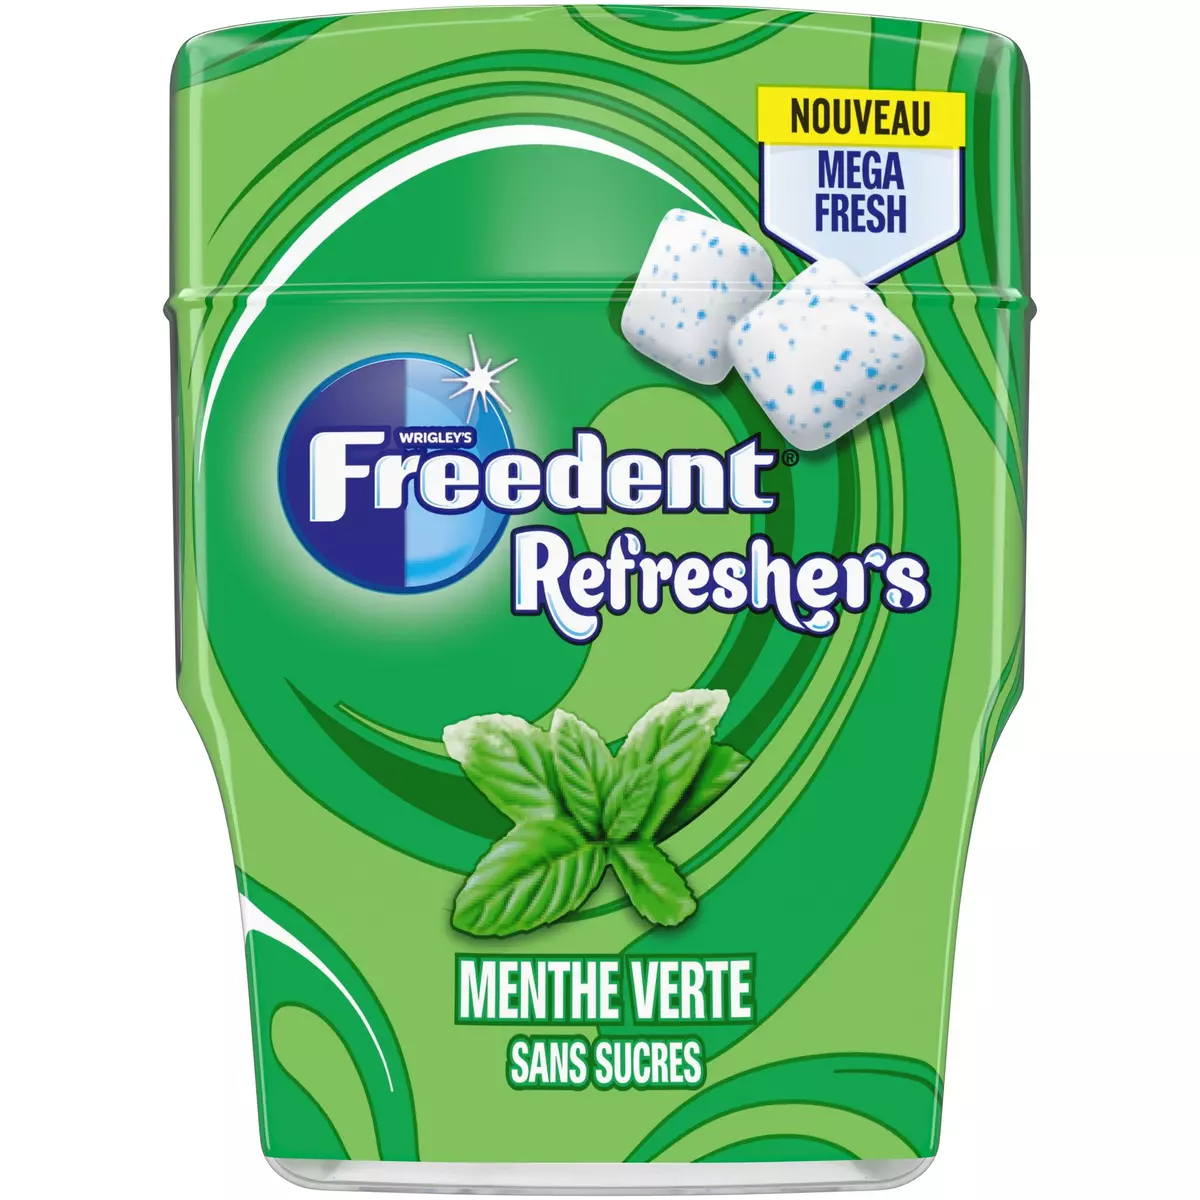 FREEDENT Refreshers Chewing-gum sans sucres menthe verte 67g pas